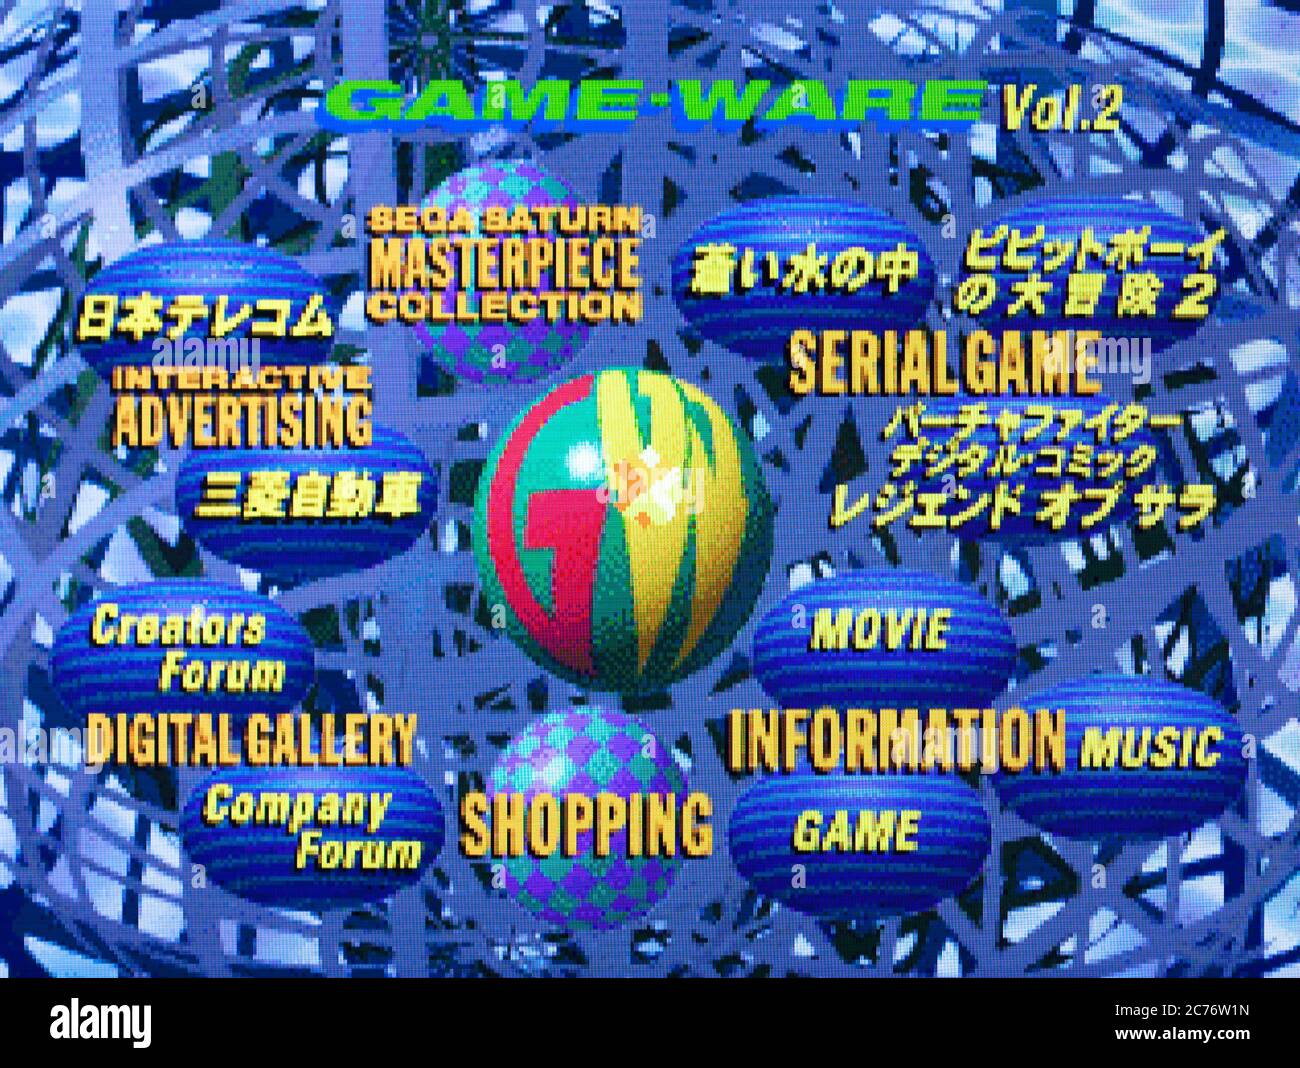 Game War Vol.2 - Sega Saturn Videogame - Editorial use only Stock Photo